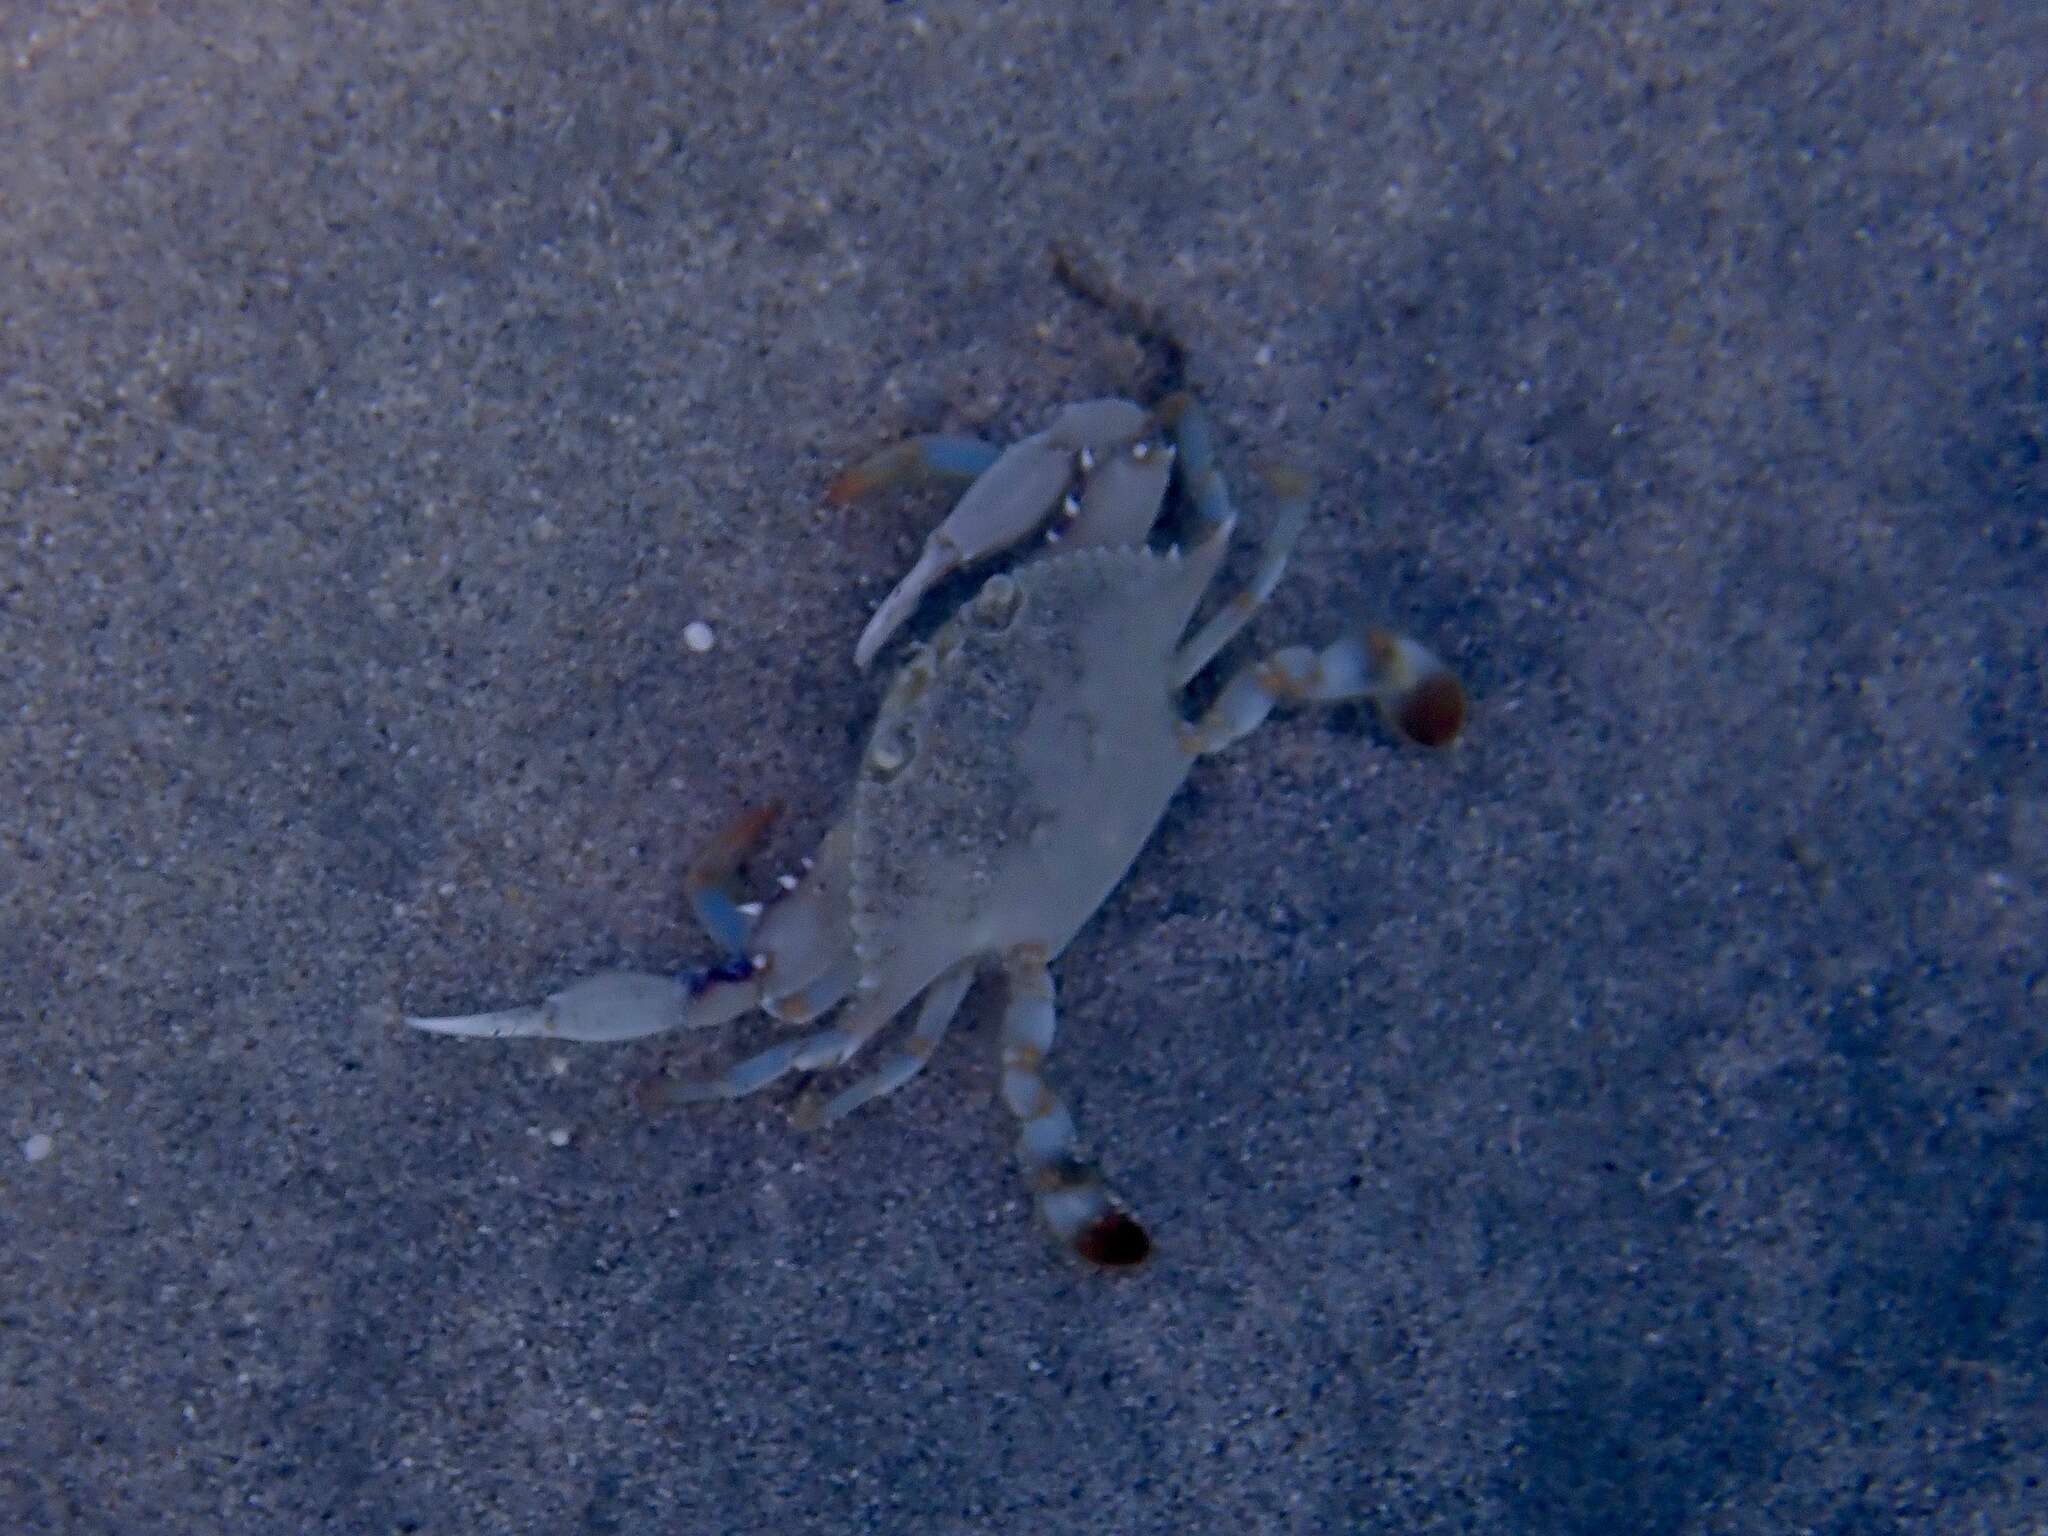 Image of ornate blue crab